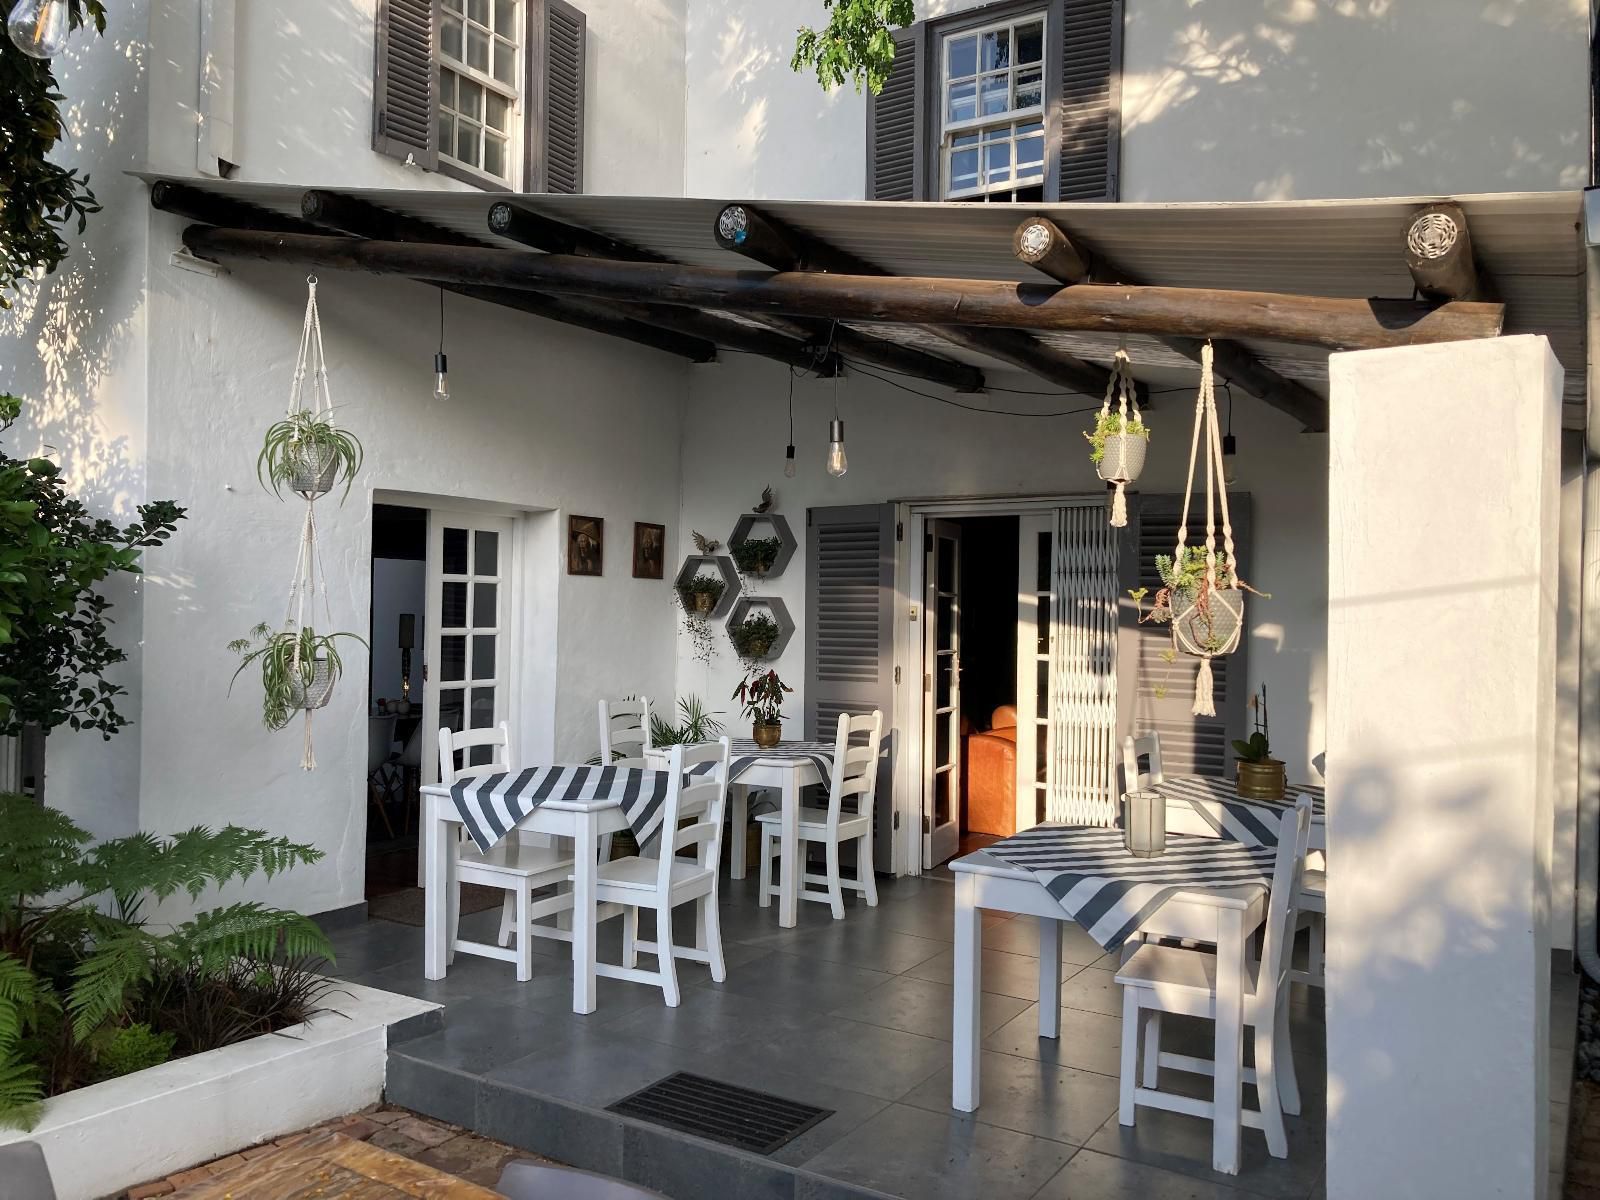 Battiss Guest House Hazelwood Pretoria Tshwane Gauteng South Africa House, Building, Architecture, Bar